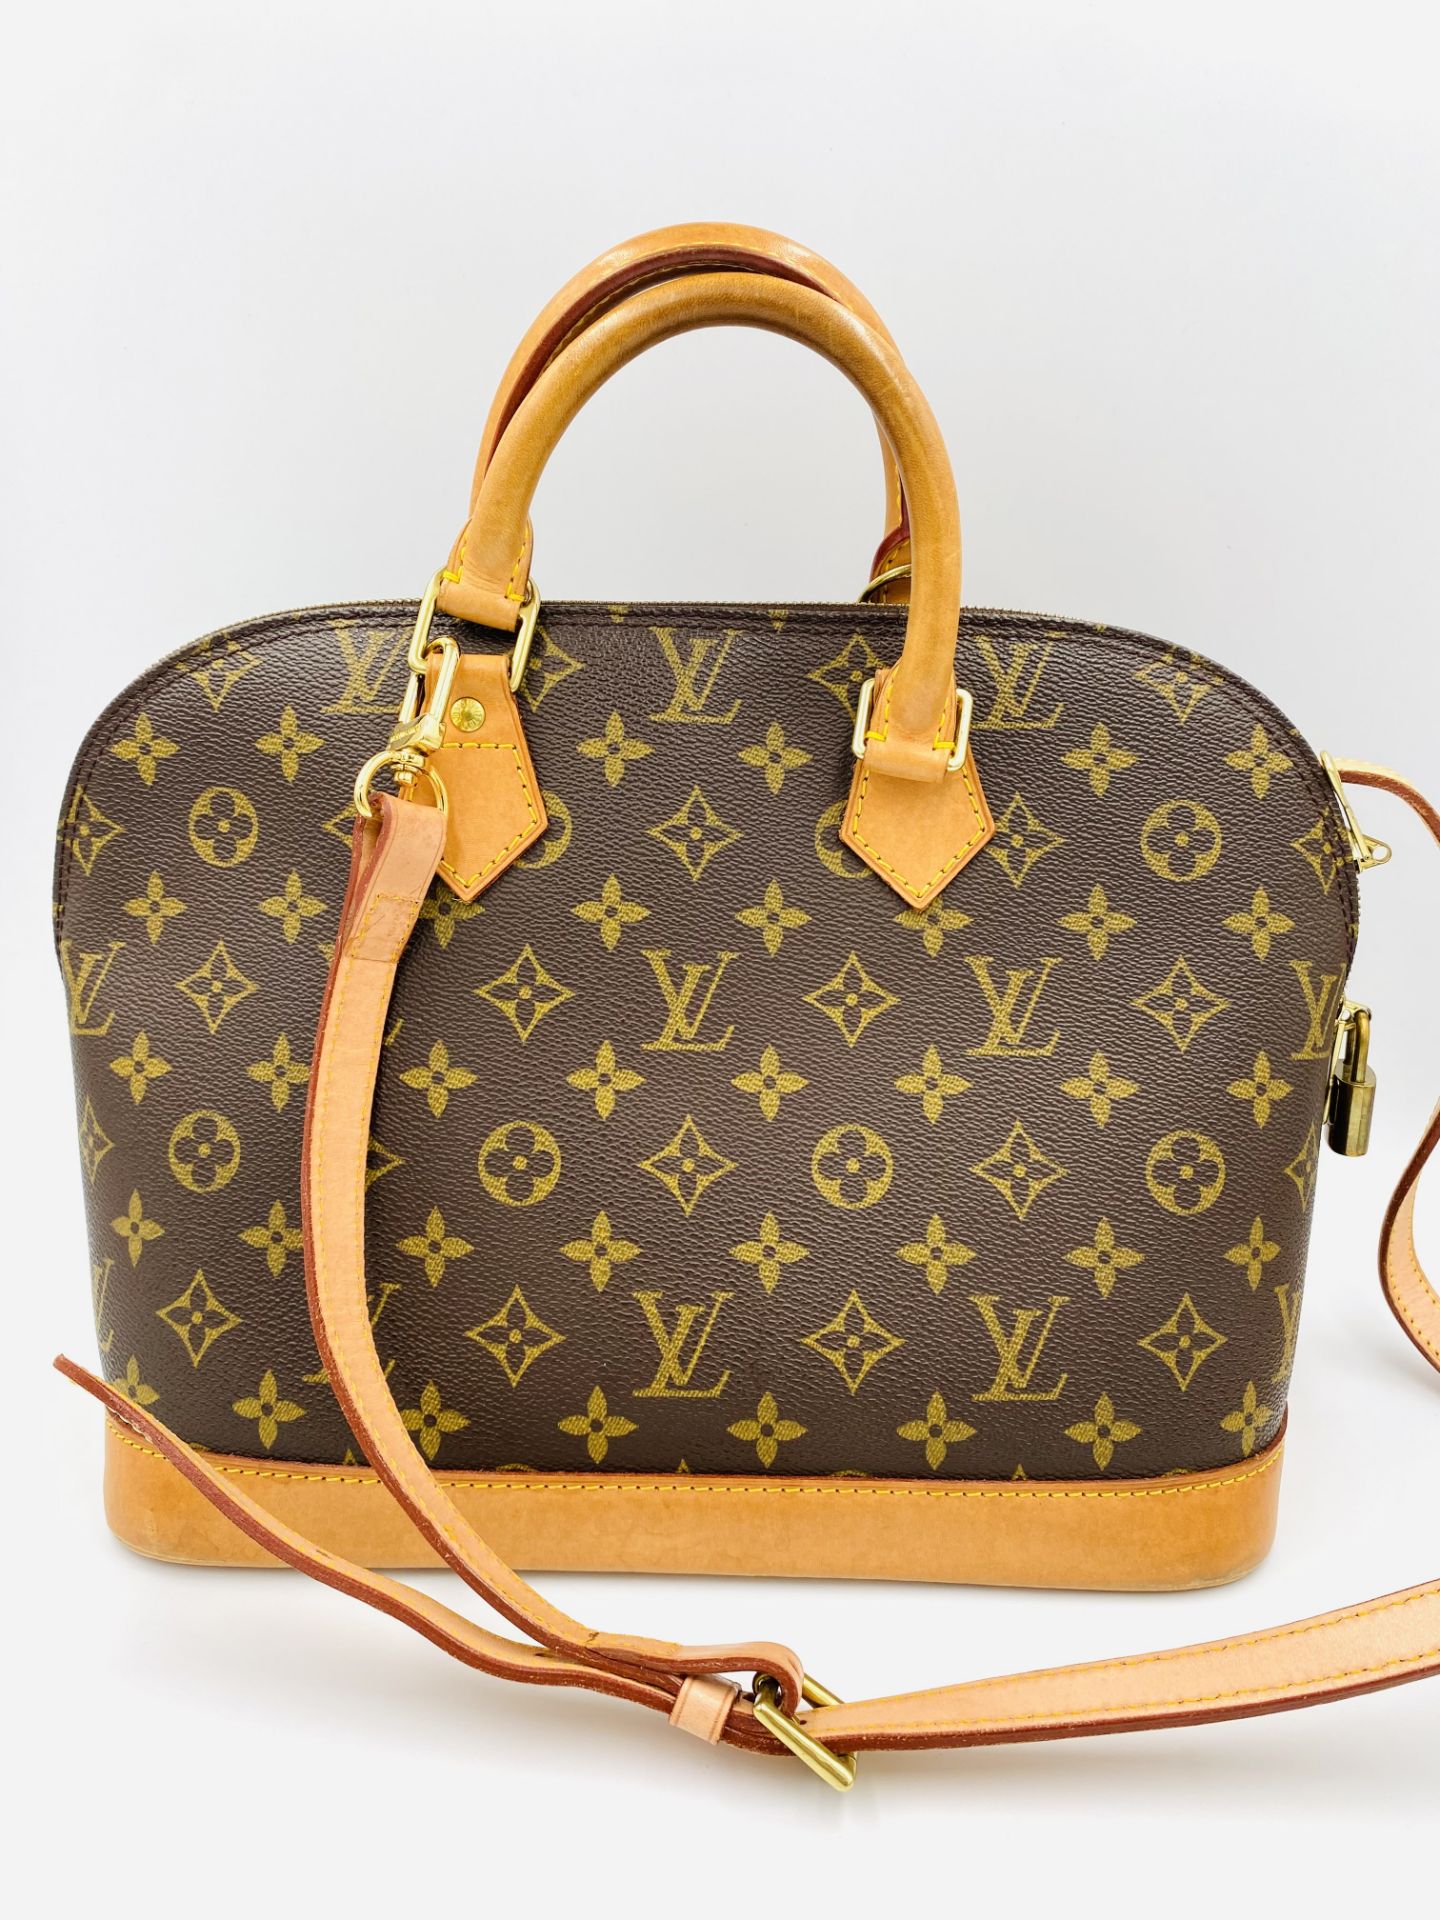 Louis Vuitton Alma handbag in monogram canvas